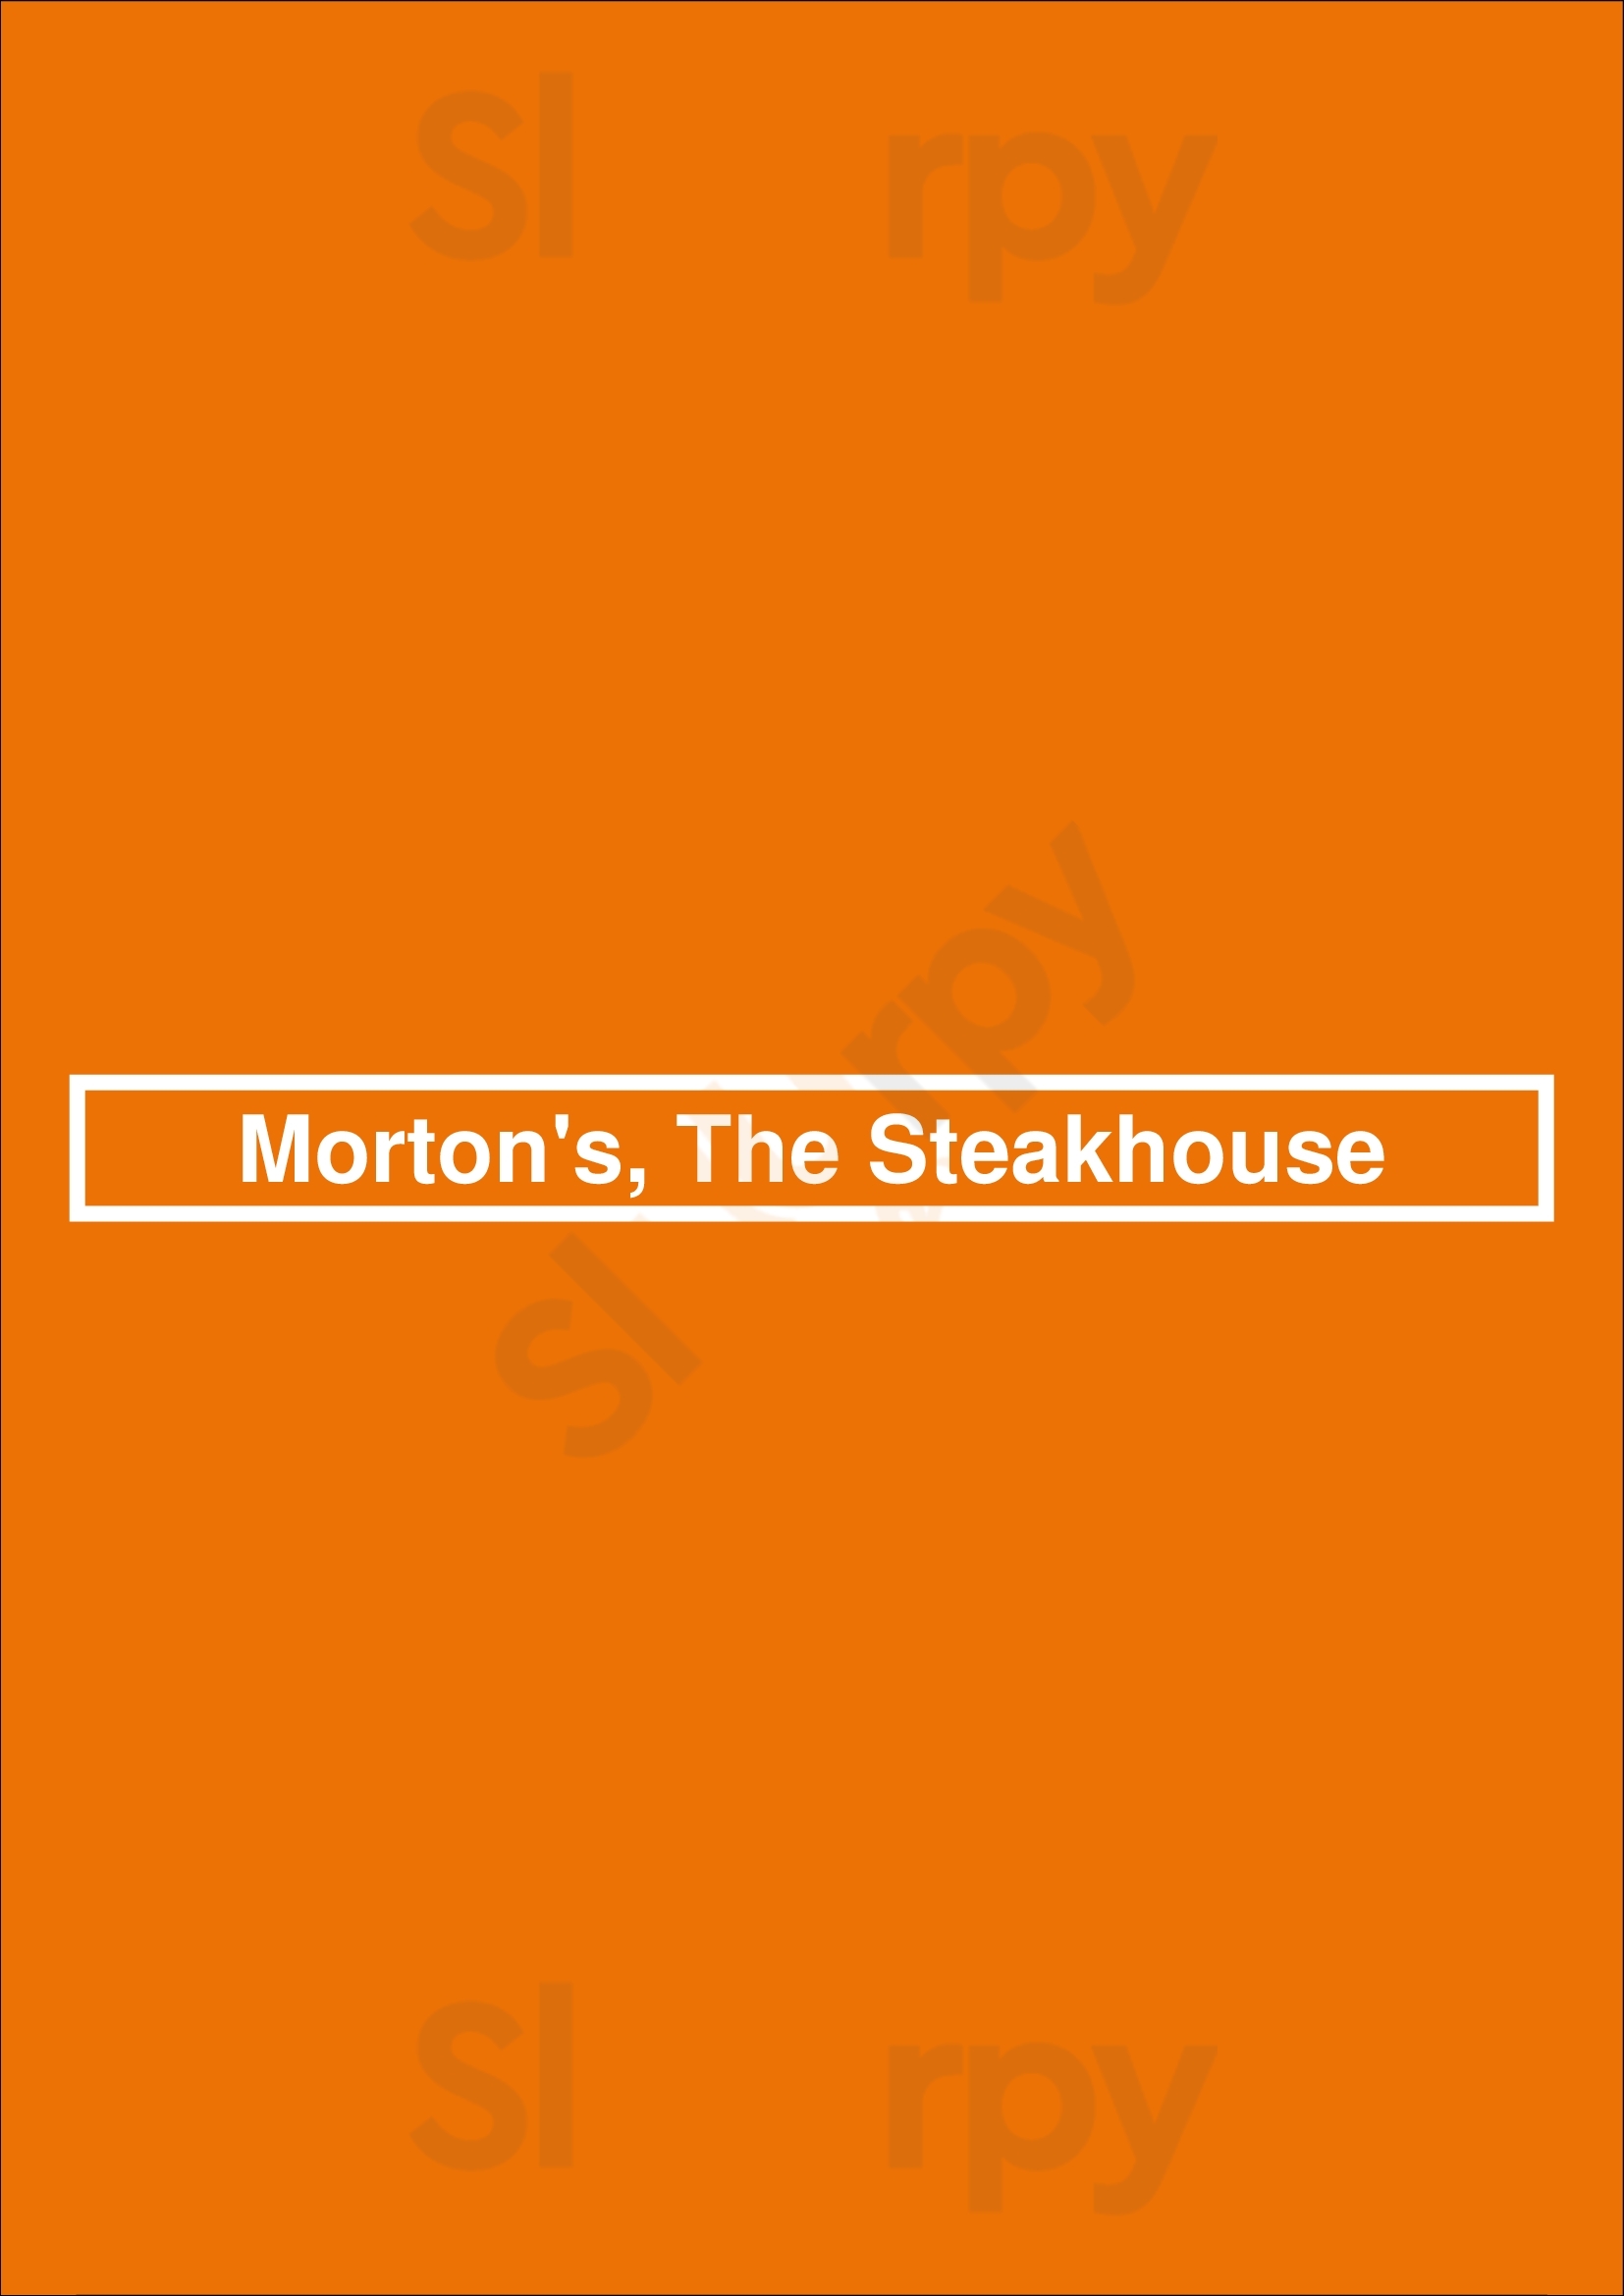 Morton's, The Steakhouse Singapore Menu - 1